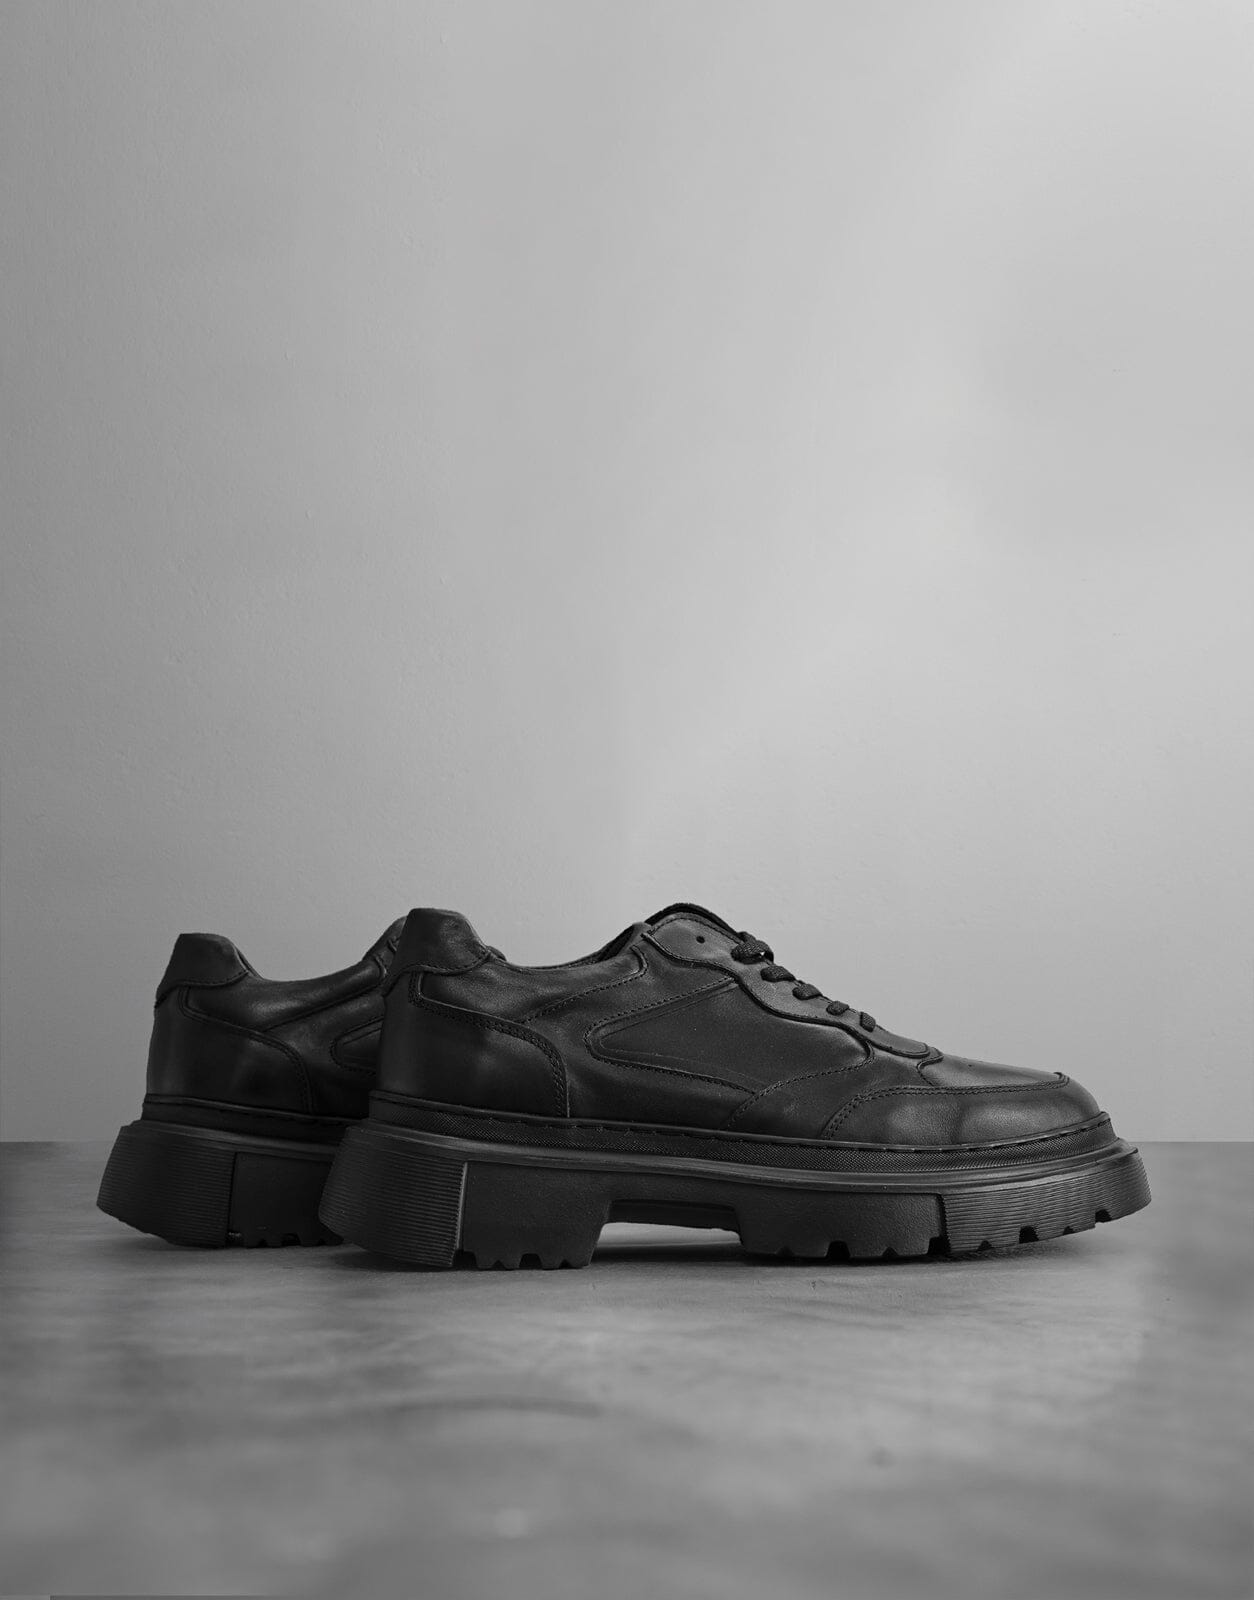 Fade Form Black Sneakers - Subwear